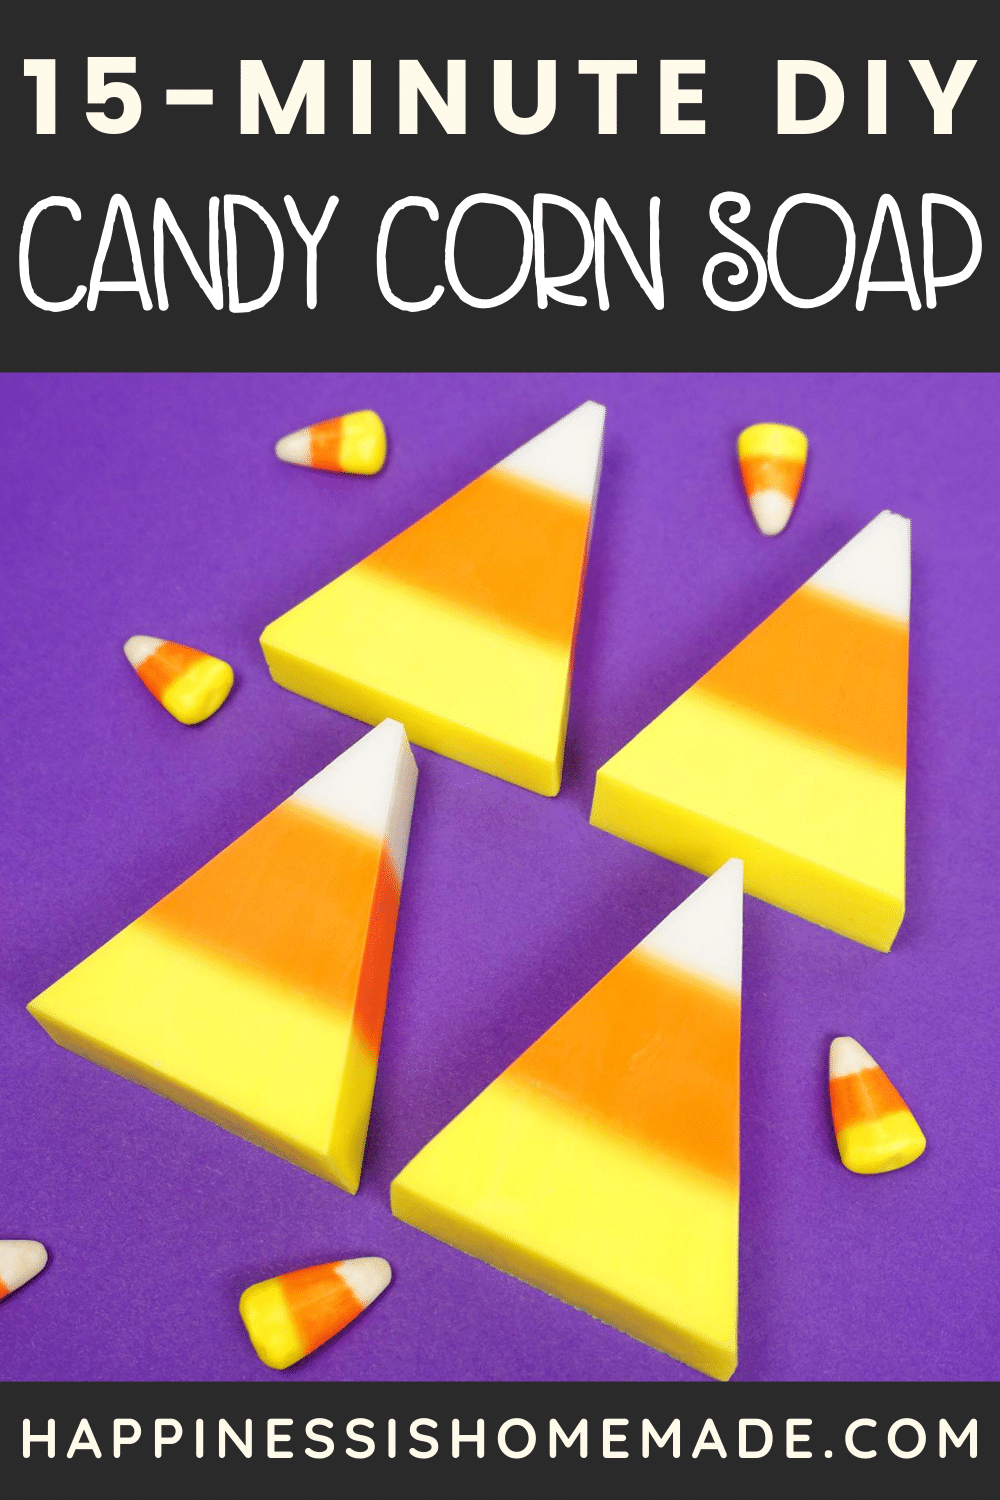 15 minute diy candy corn soap